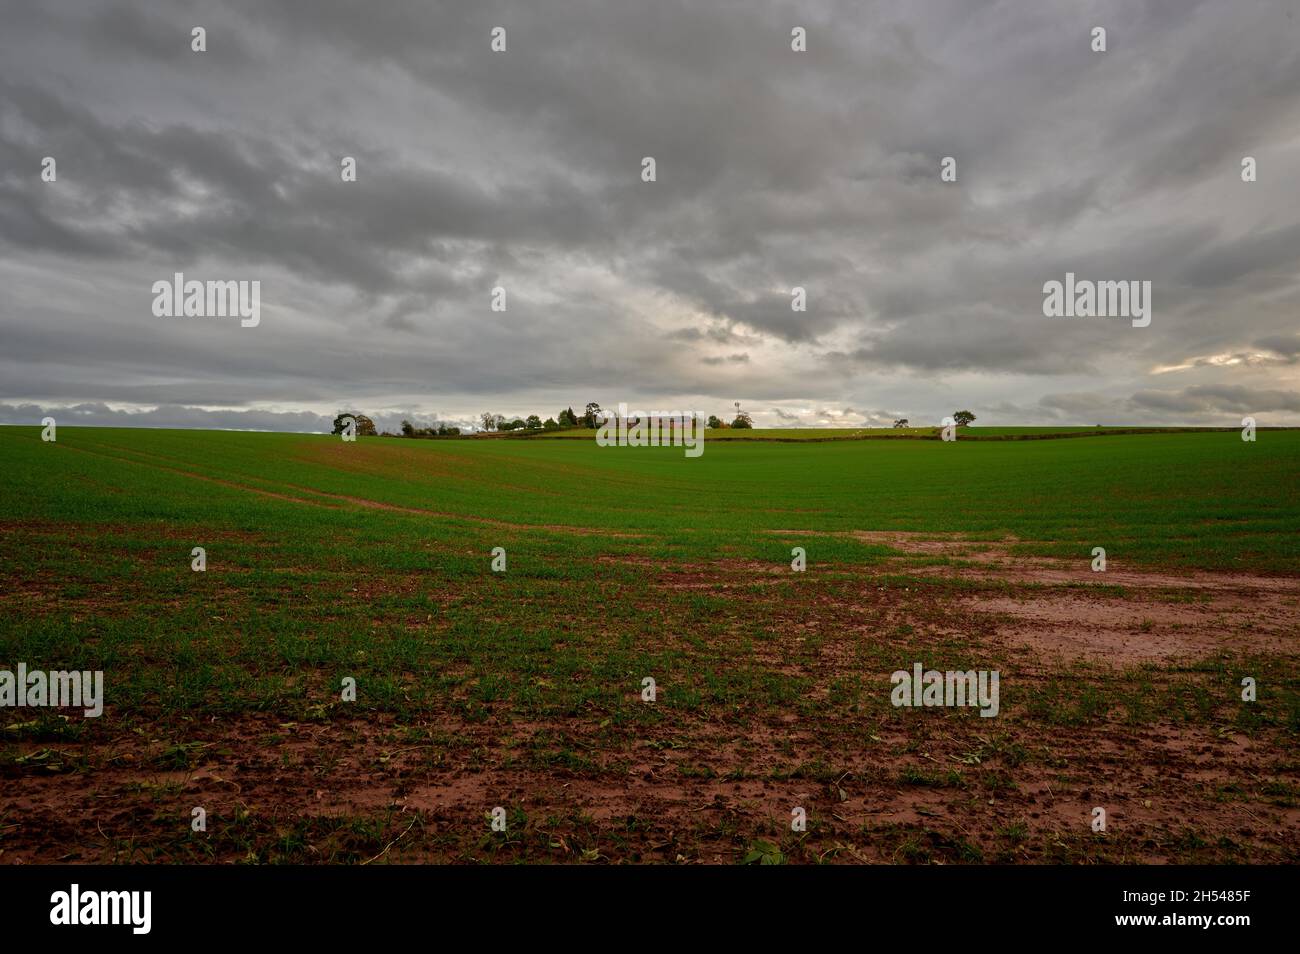 Farm Feld unter bewölktem Himmel mit Bäumen und Hecken am Horizont Stockfoto